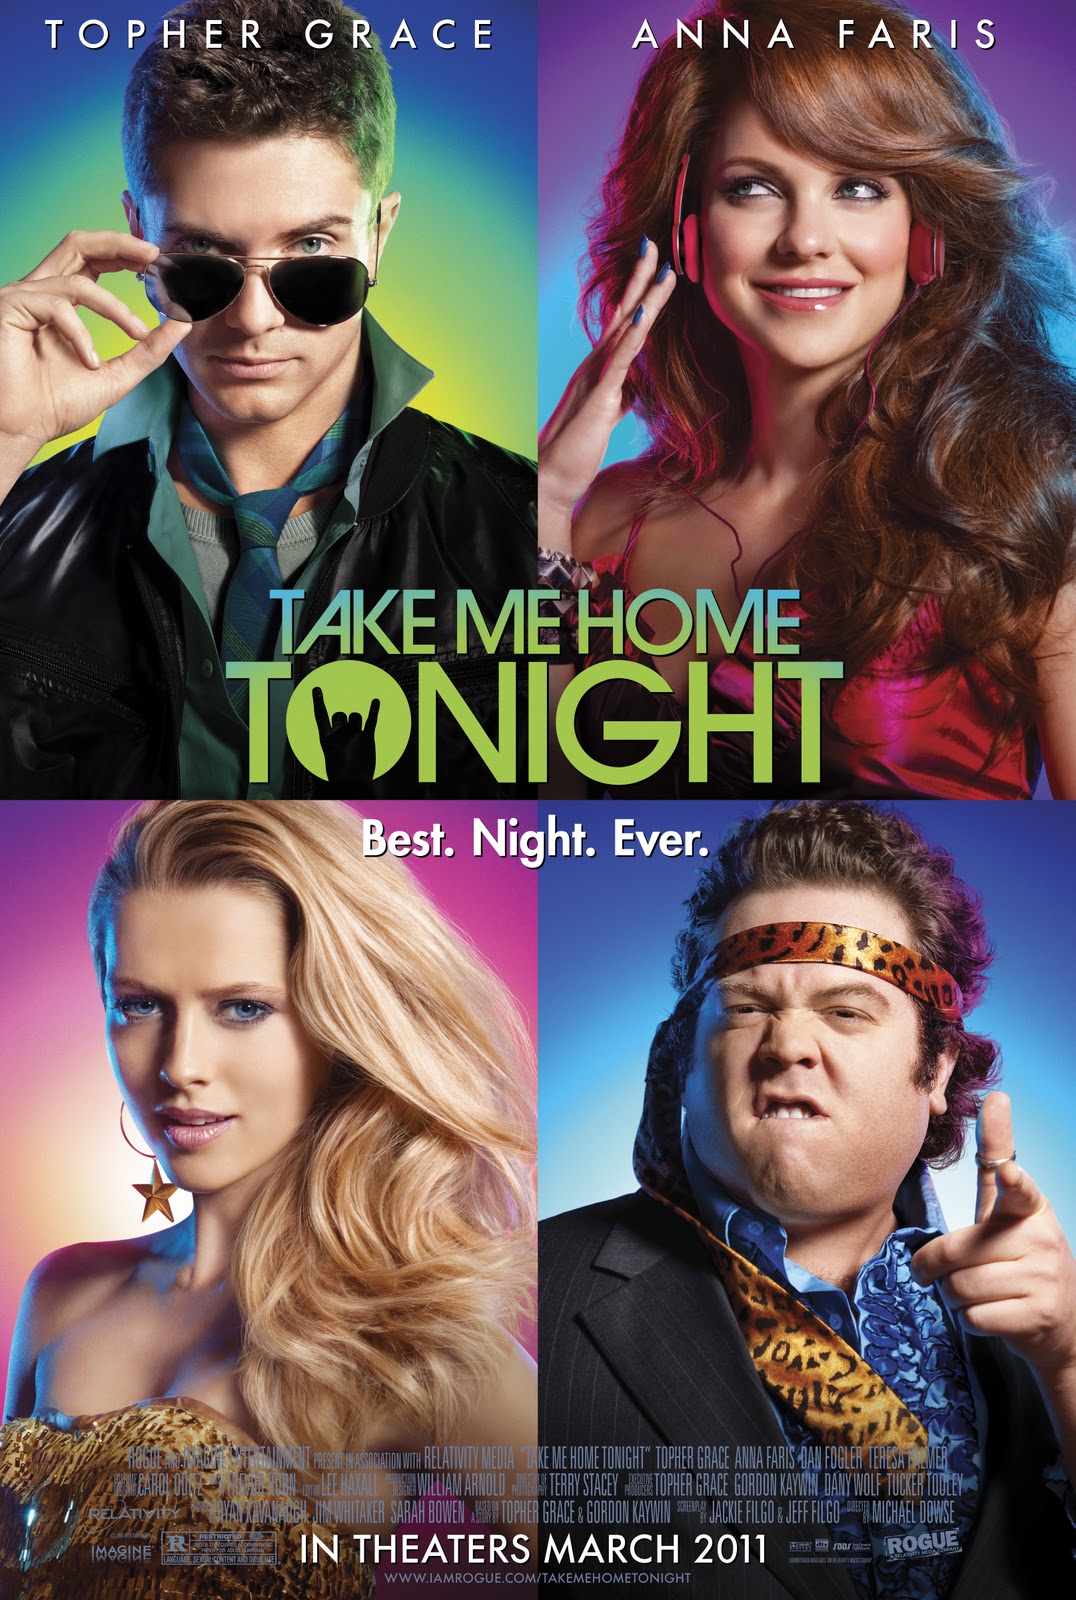 Take Me Home Tonight Music Video sandwichjohnfilms